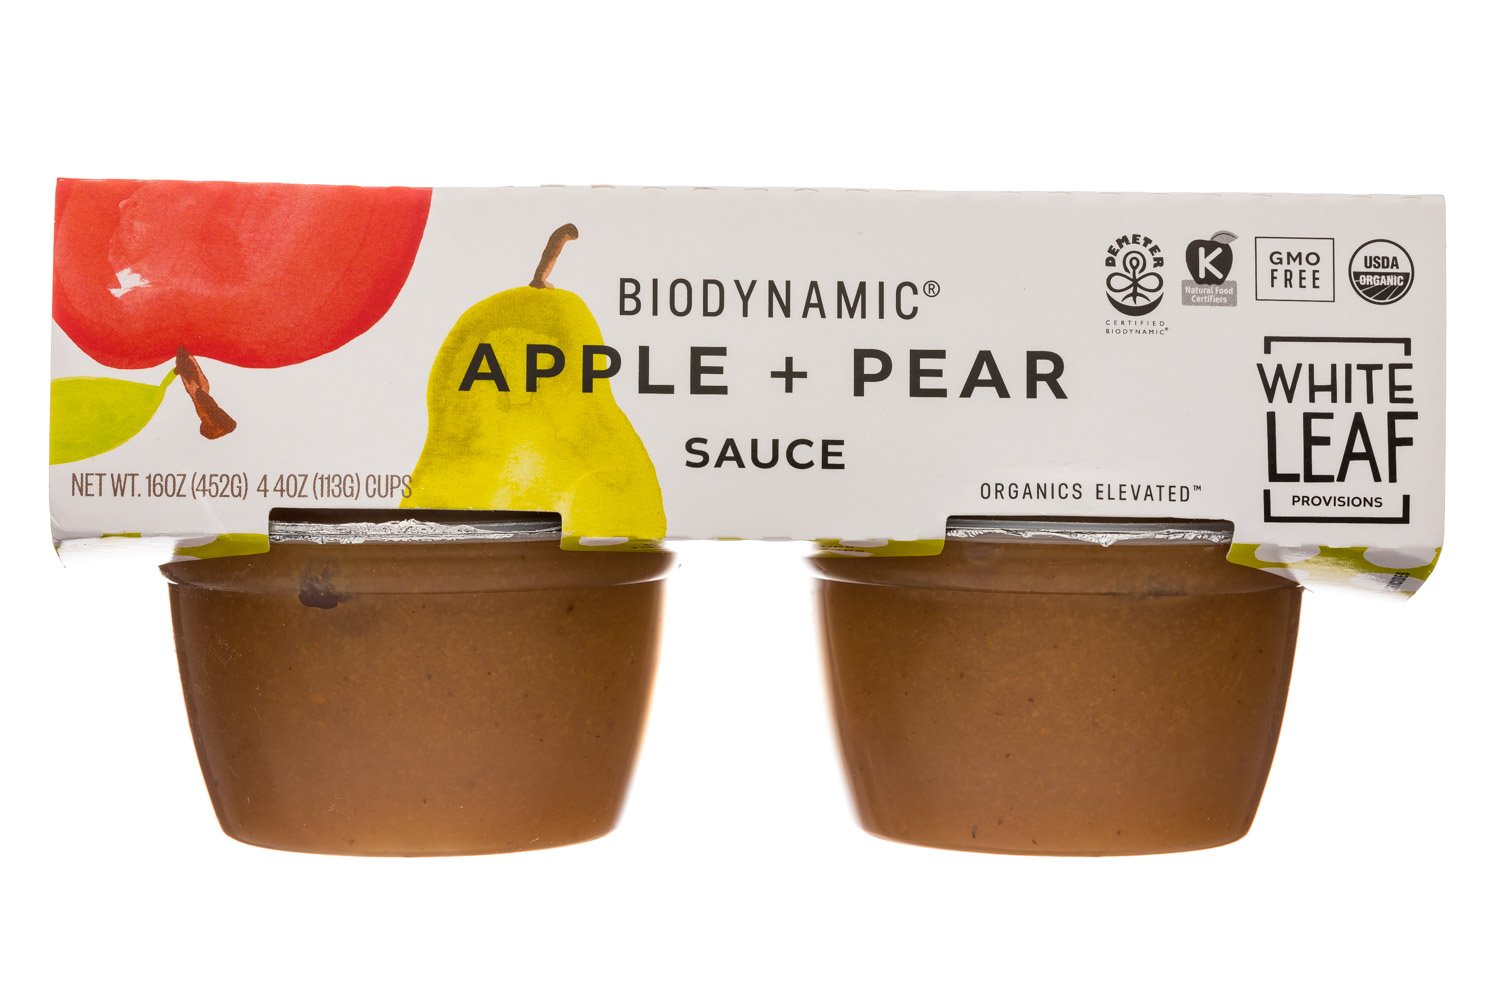 Apple + Pear Sauce